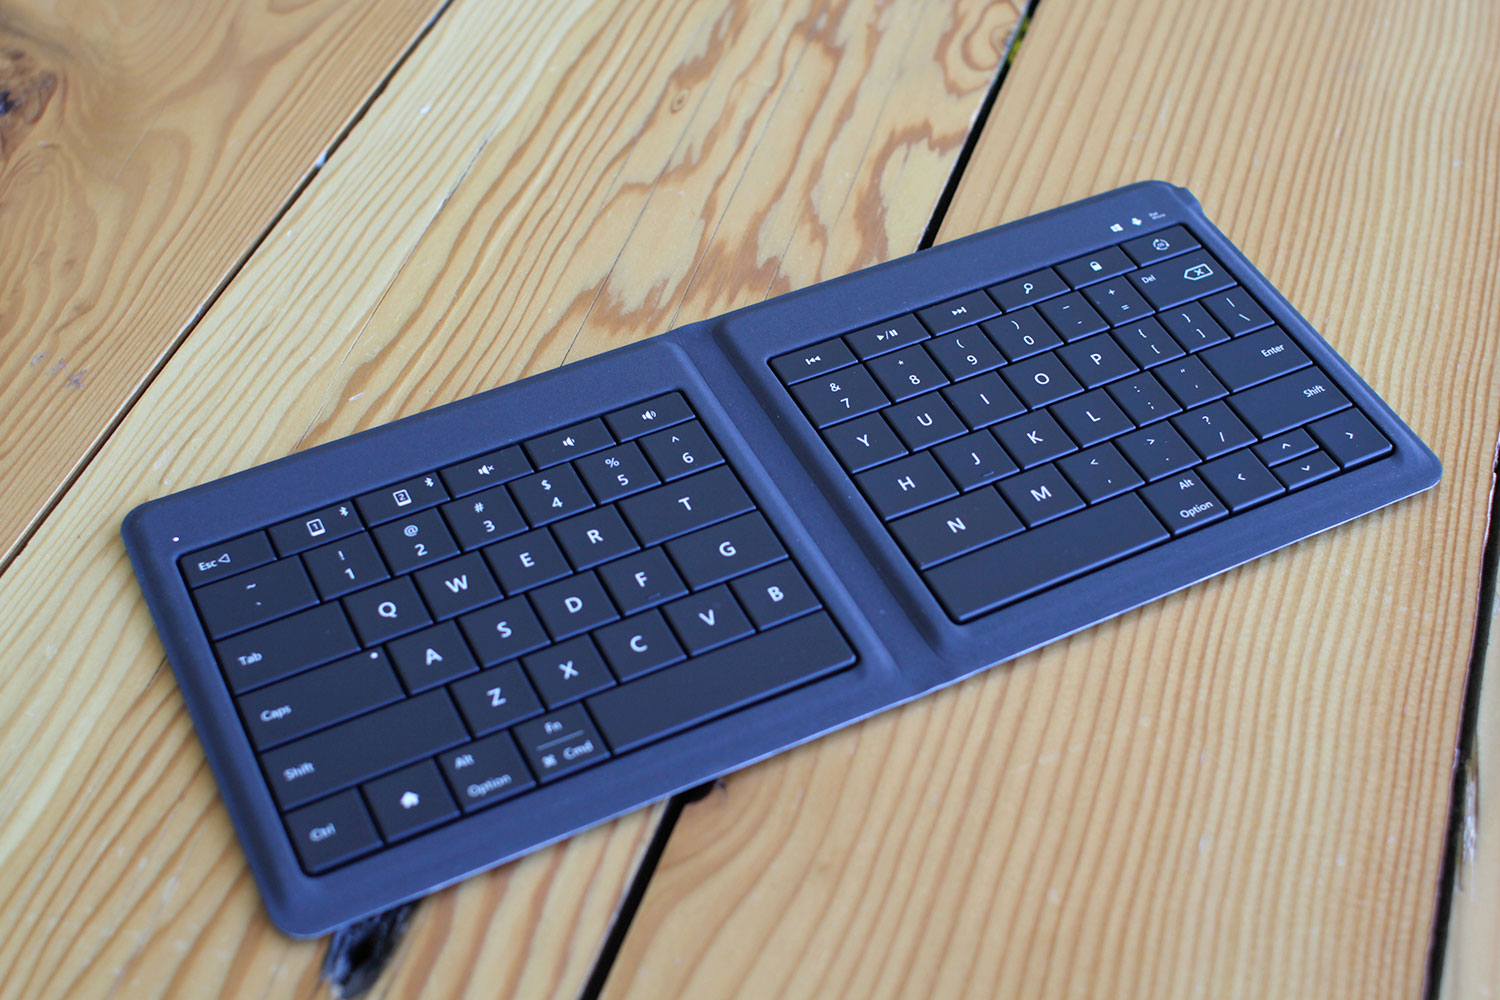 Microsoft Universal Foldable Keyboard mobile Bluetooth